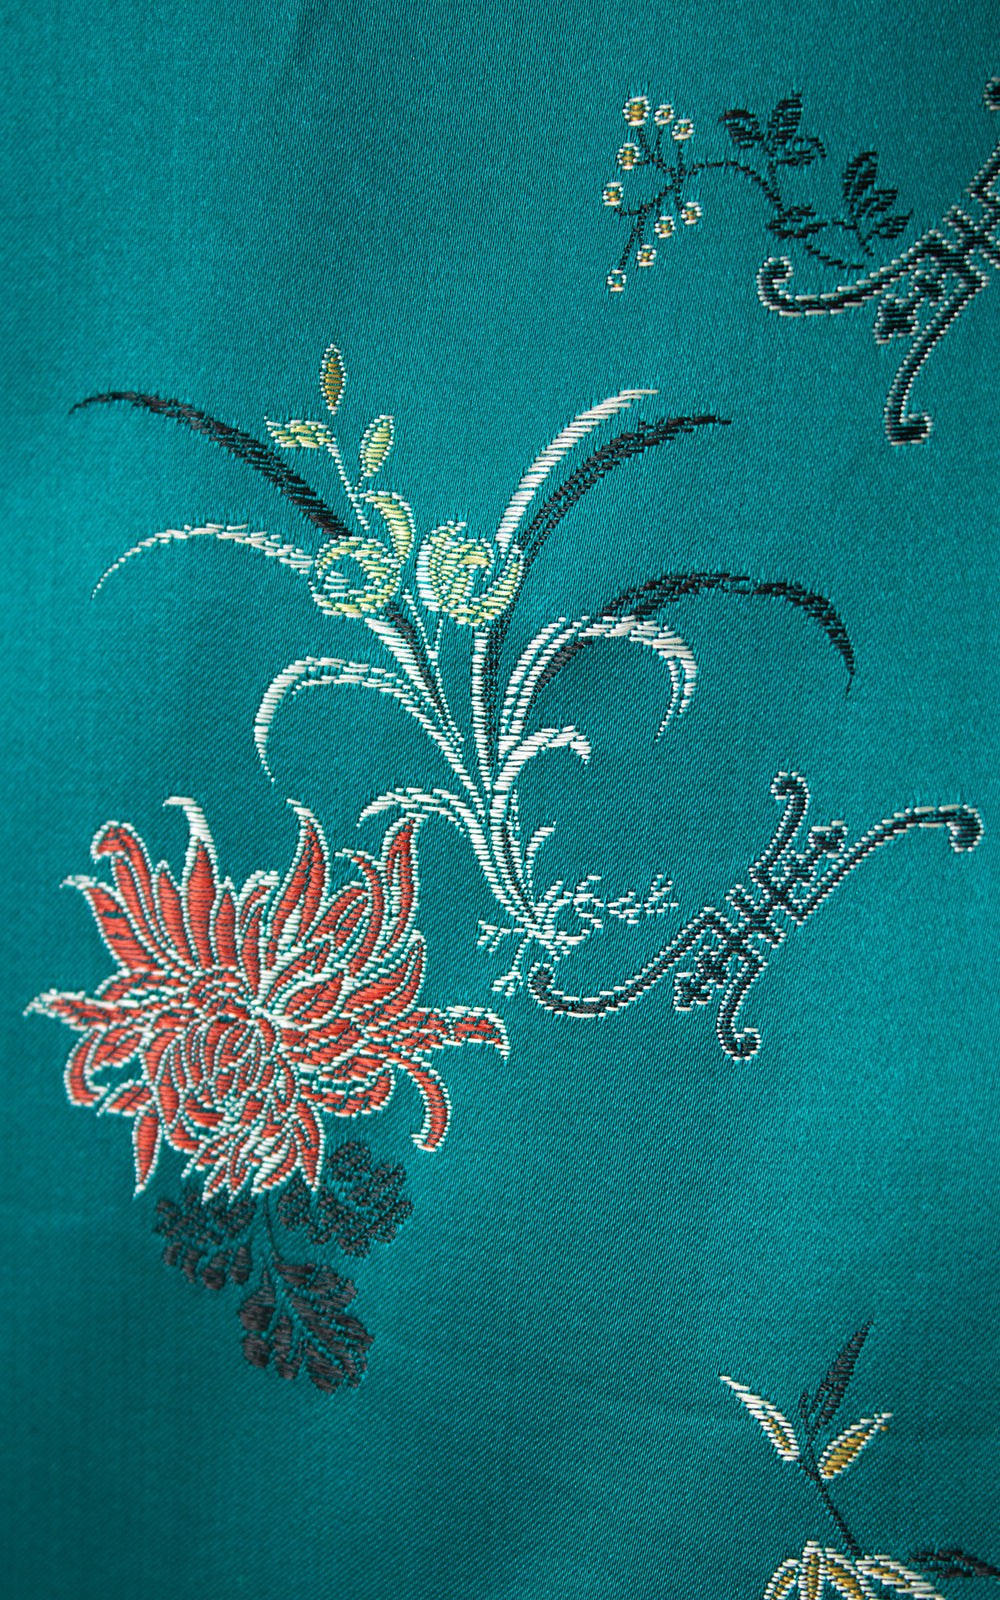 1960s Reversible Asian Floral Satin Jacquard Jacket | small